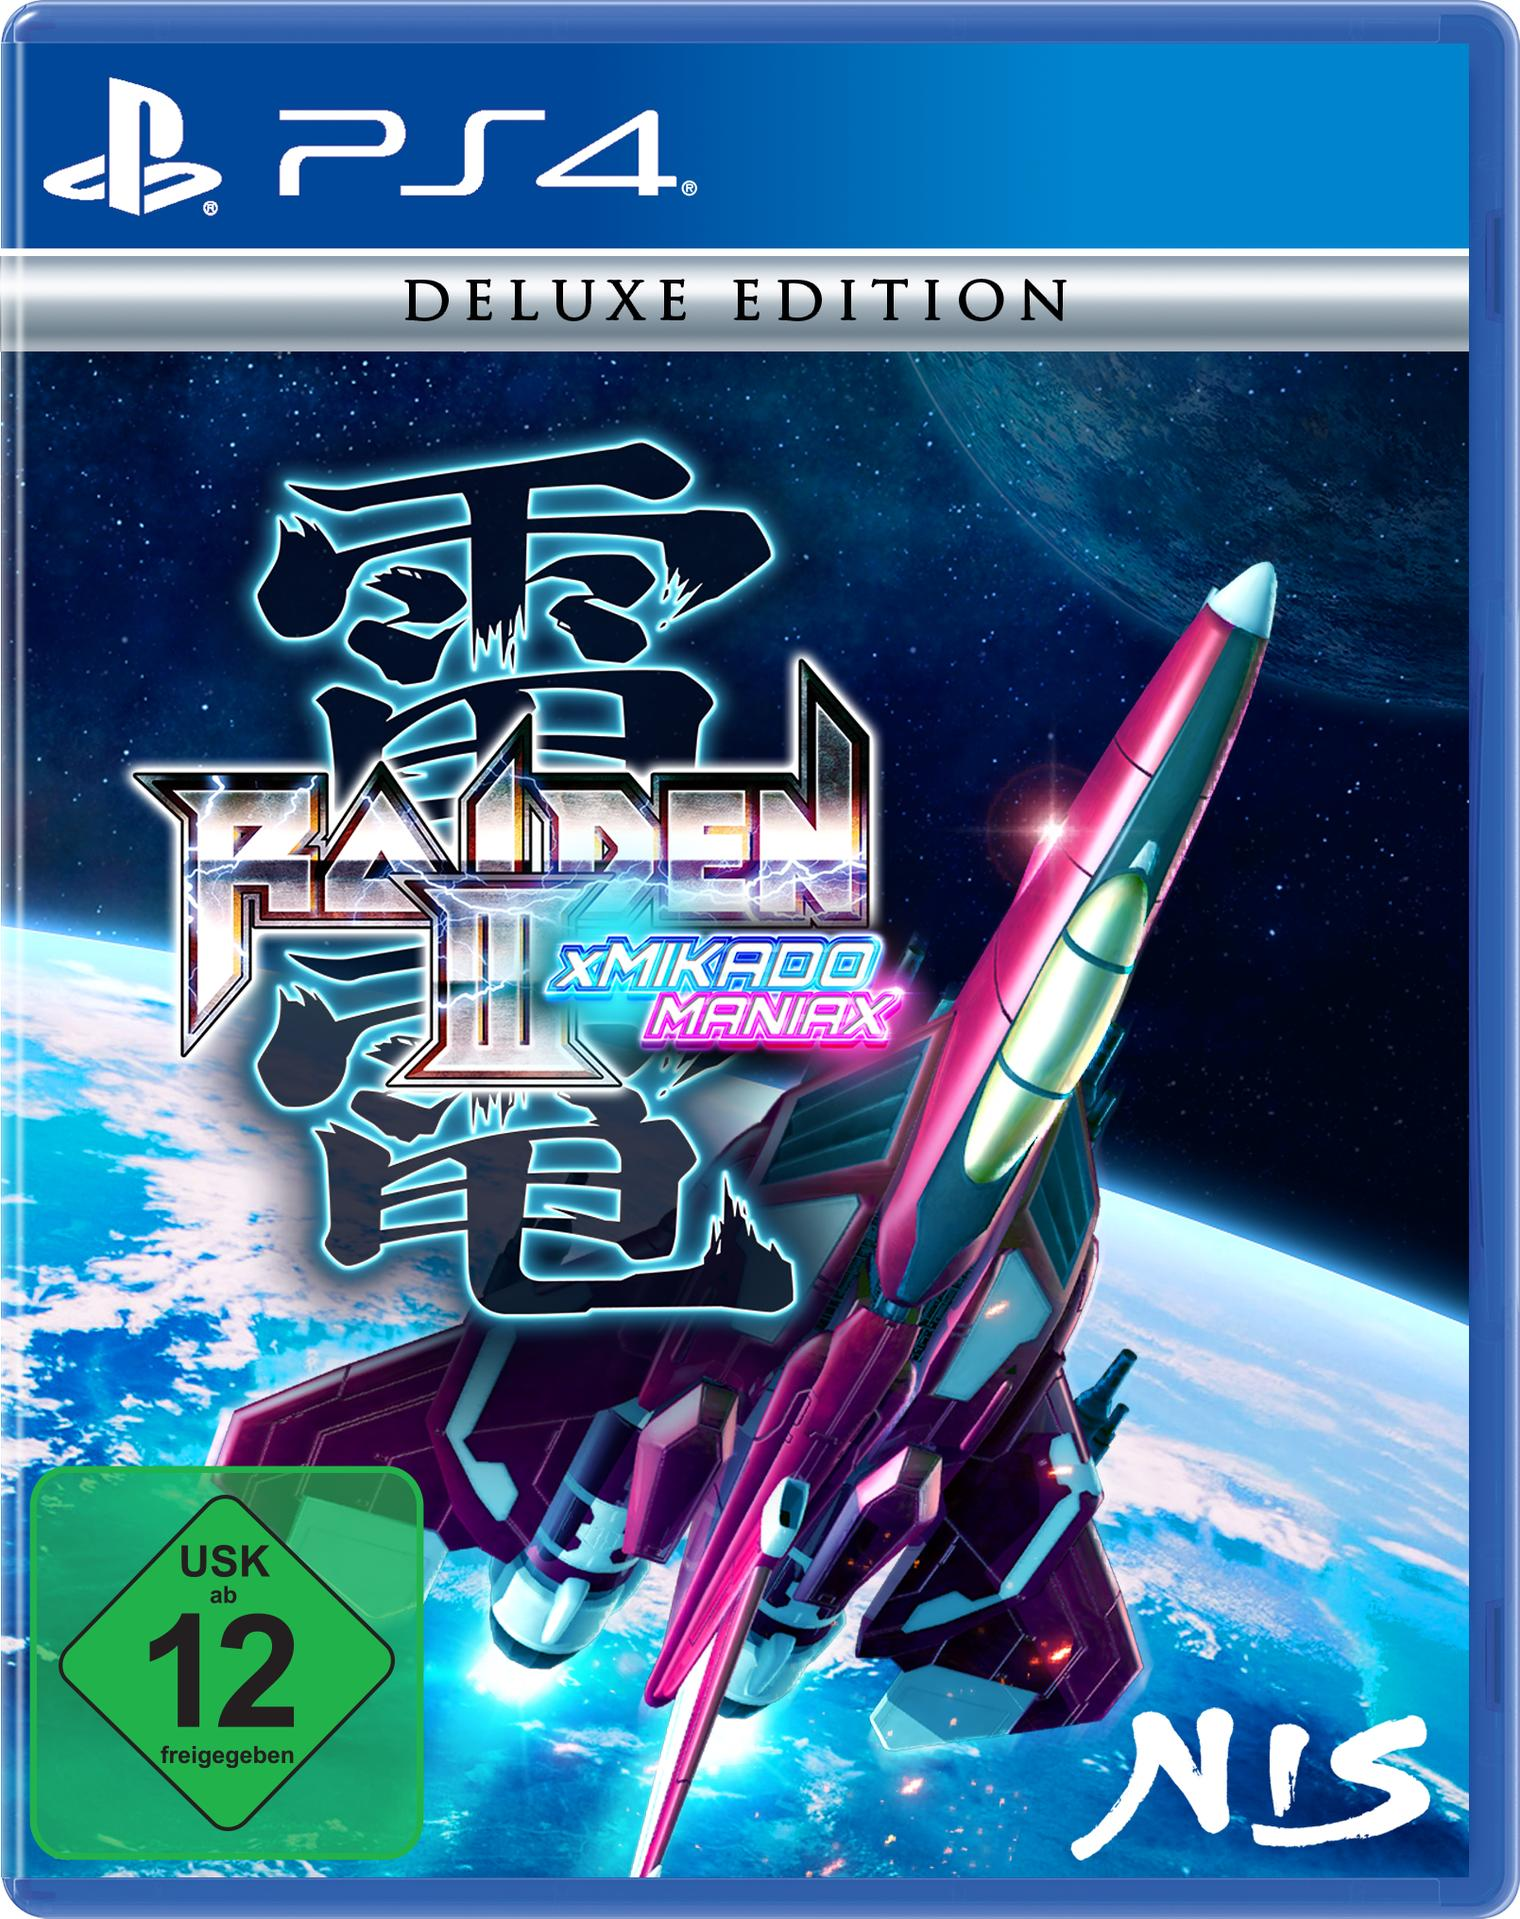 Raiden III x MIKADO MANIAX - [PlayStation Deluxe 4] Edition